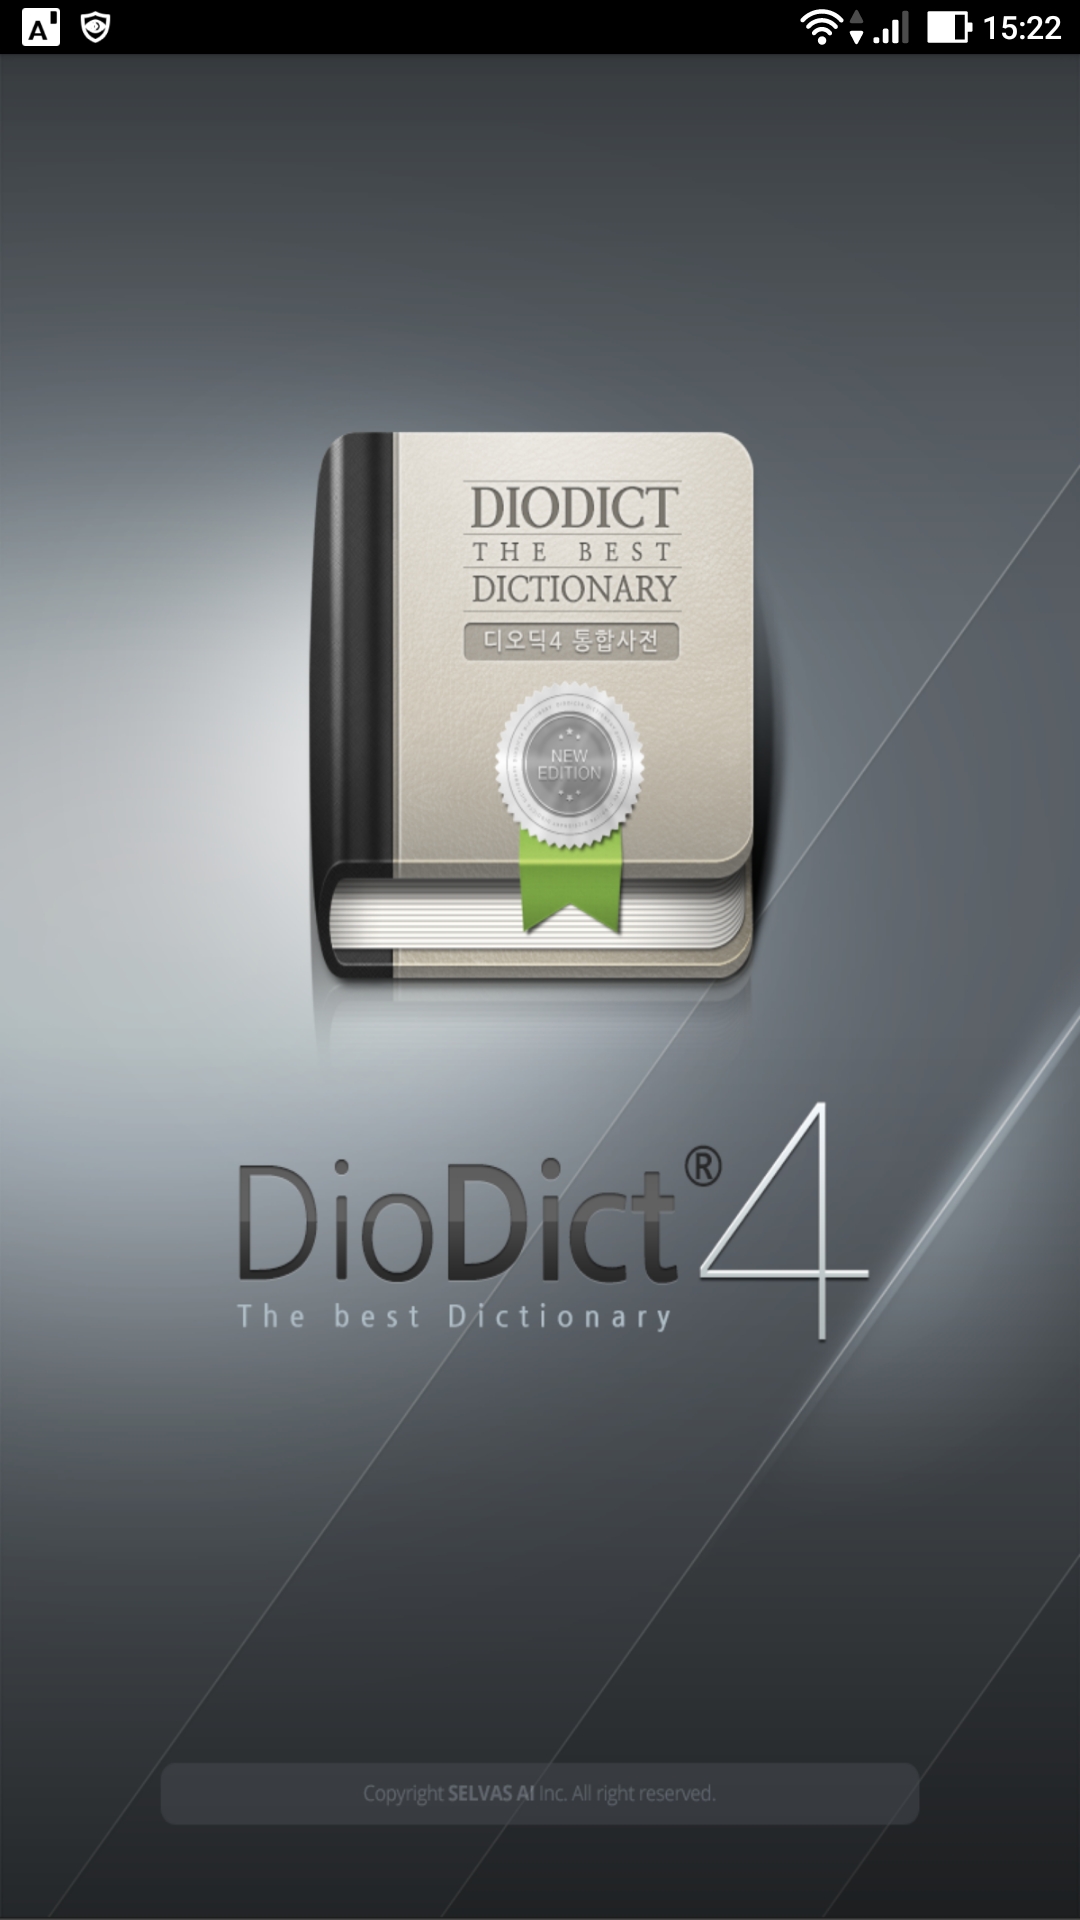 diodict01.jpg